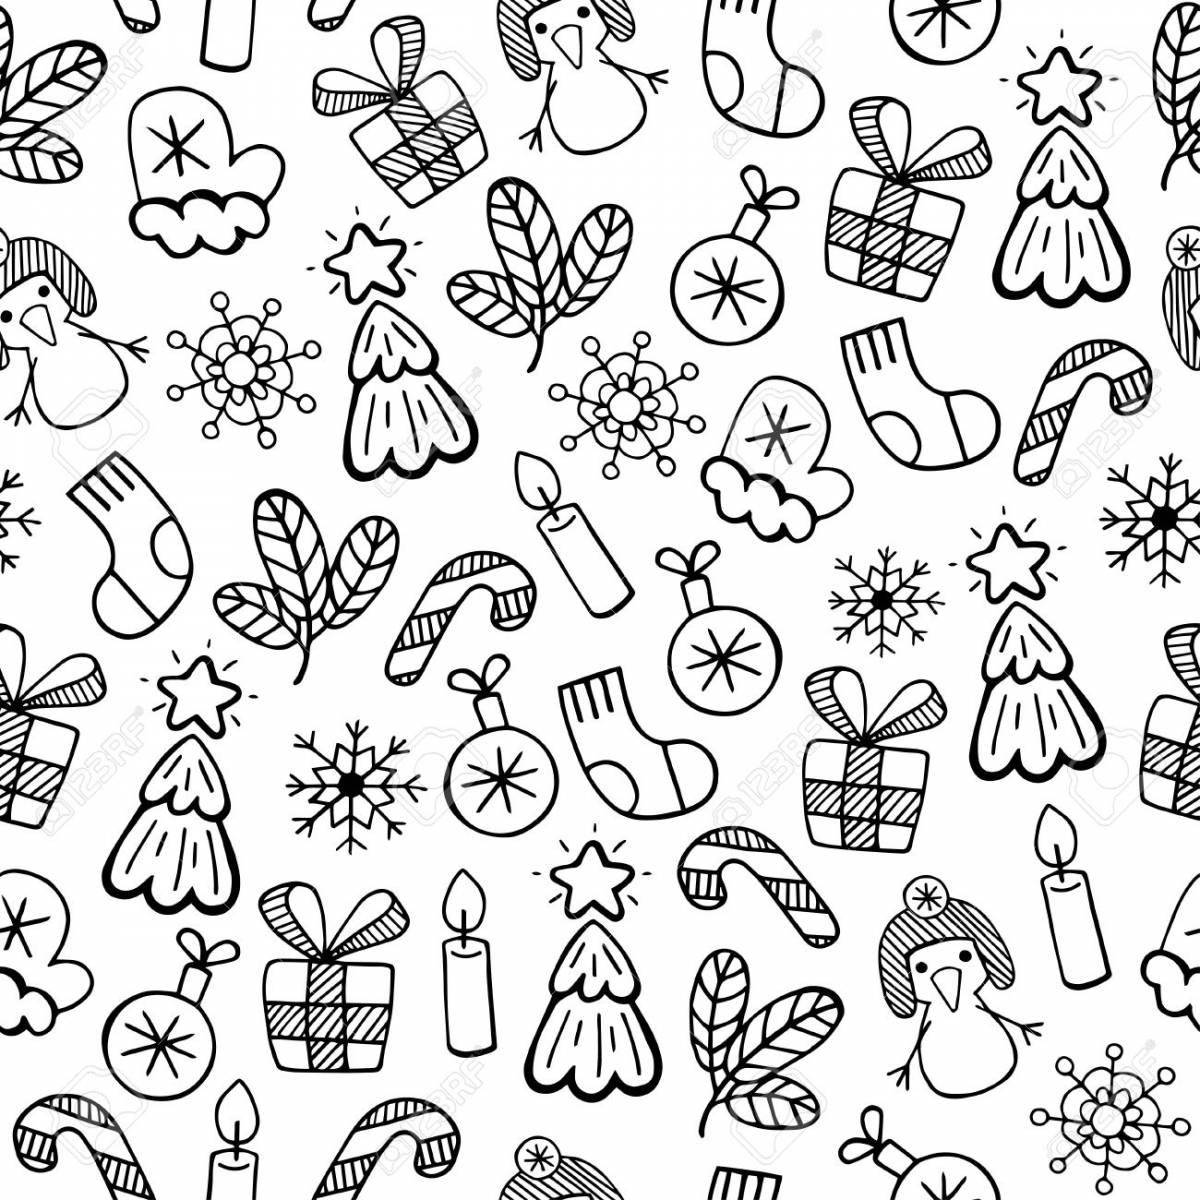 Animated Christmas stickers